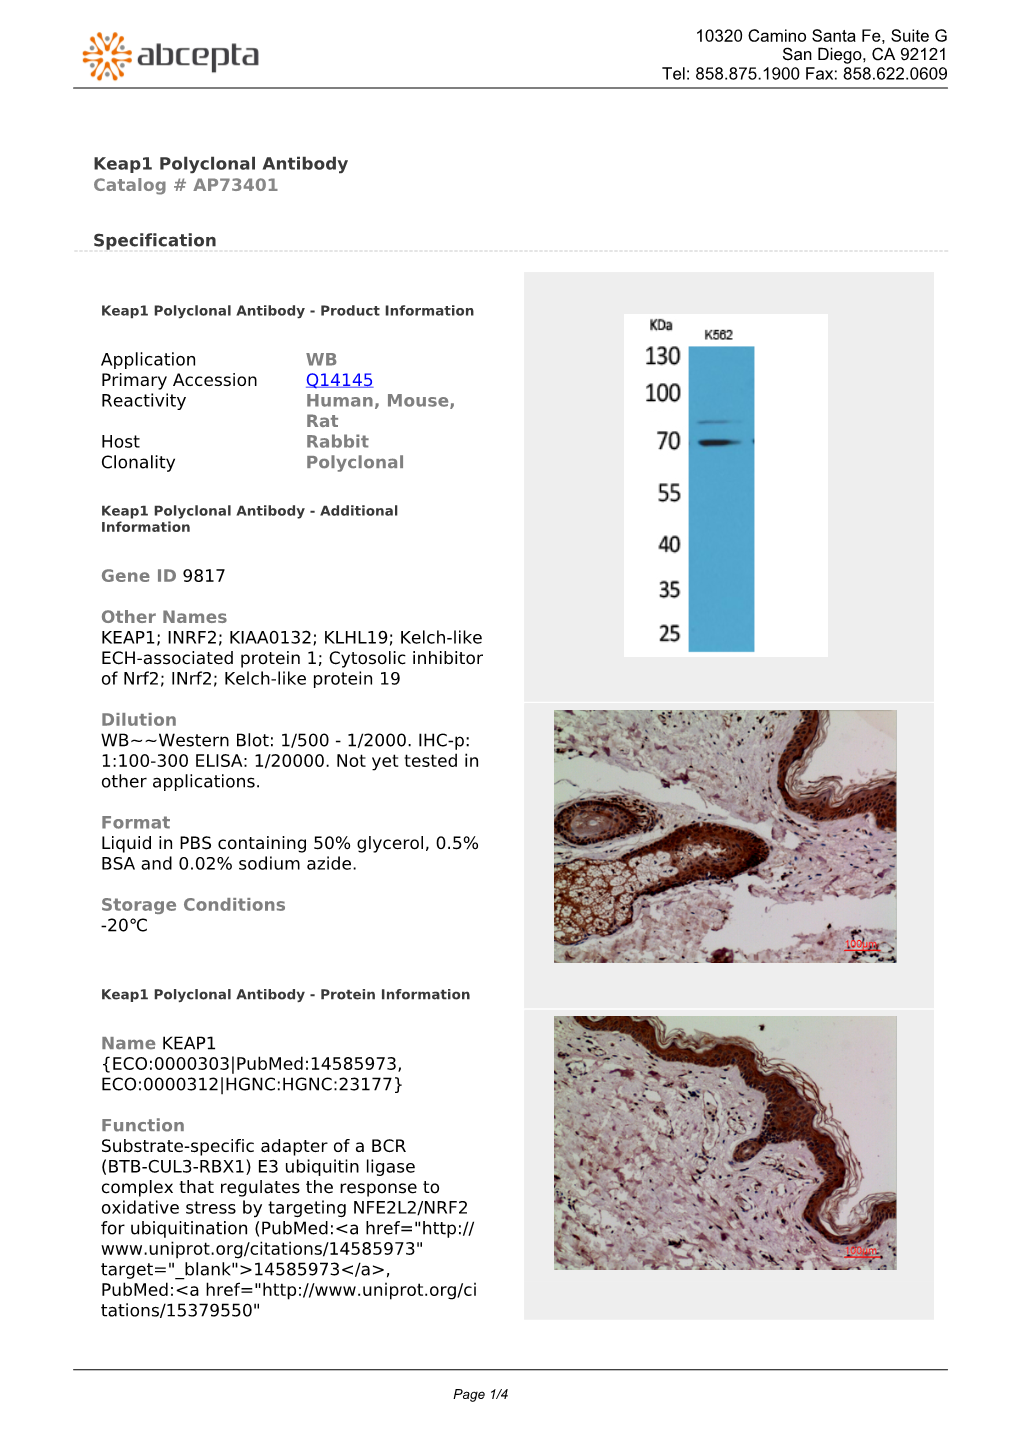 Keap1 Polyclonal Antibody Catalog # AP73401